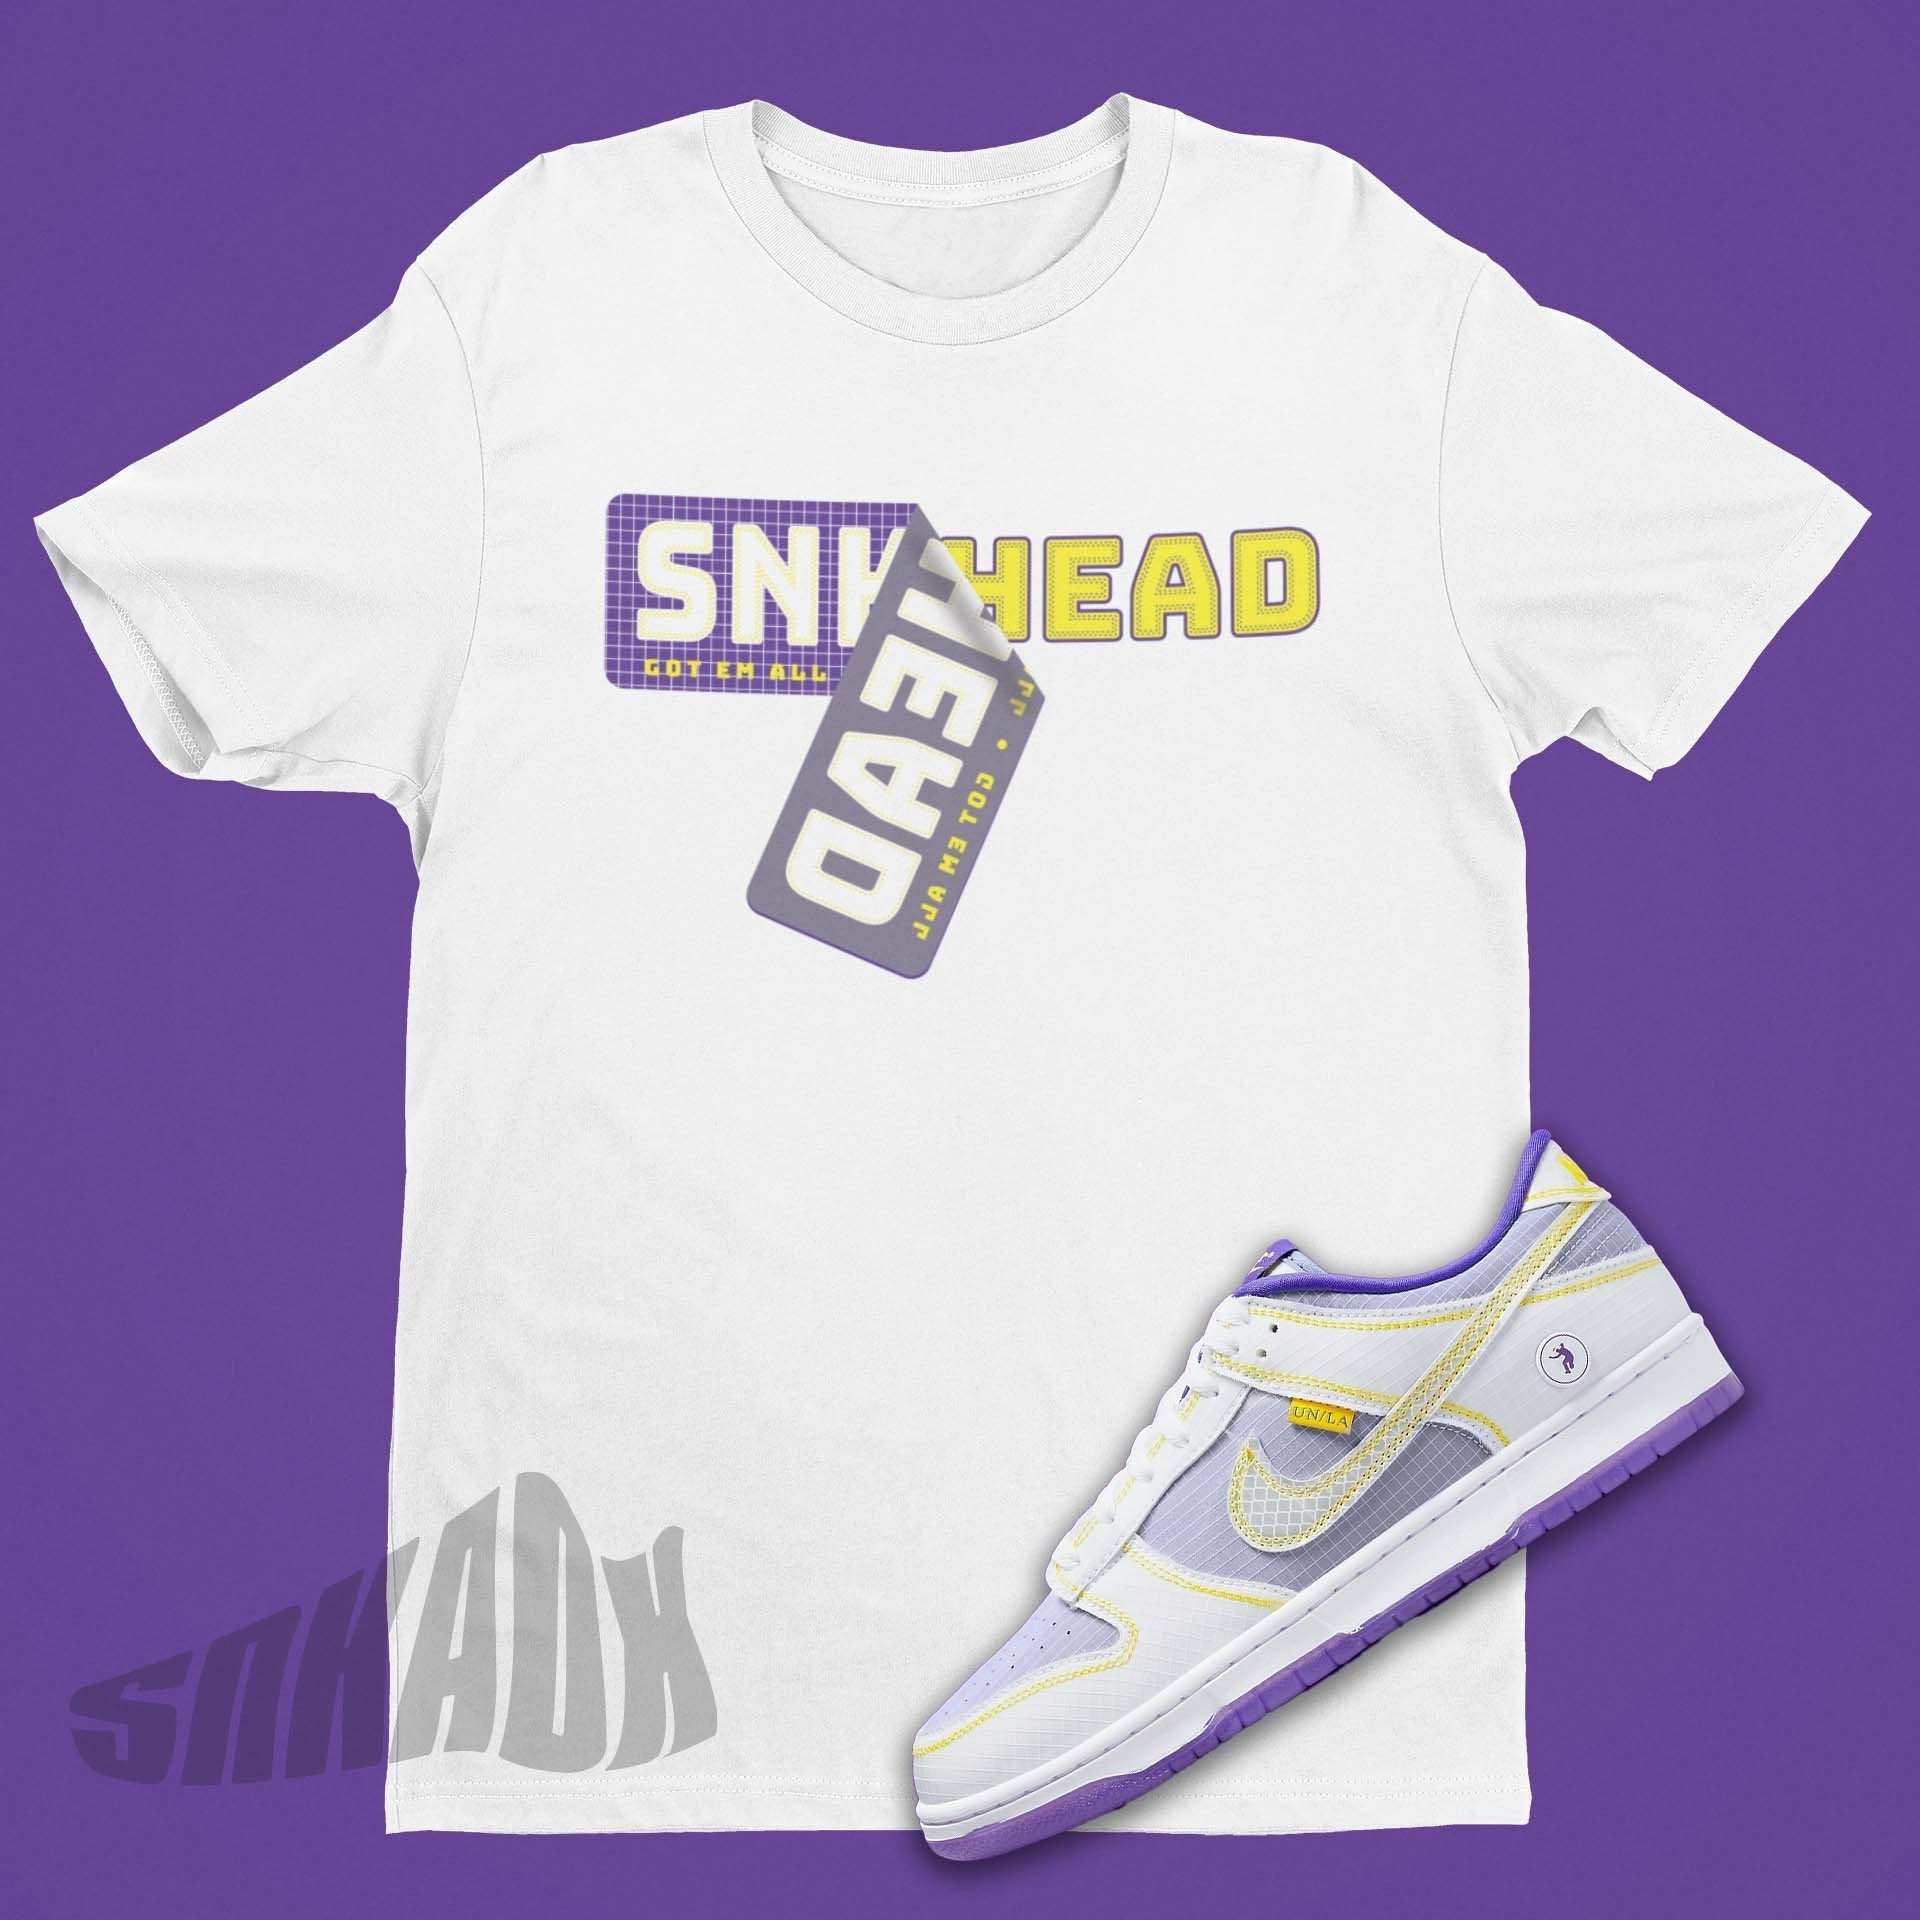 Custom Nike Air Force 1 Low 'Lakers' White Yellow Purple – Sneaker